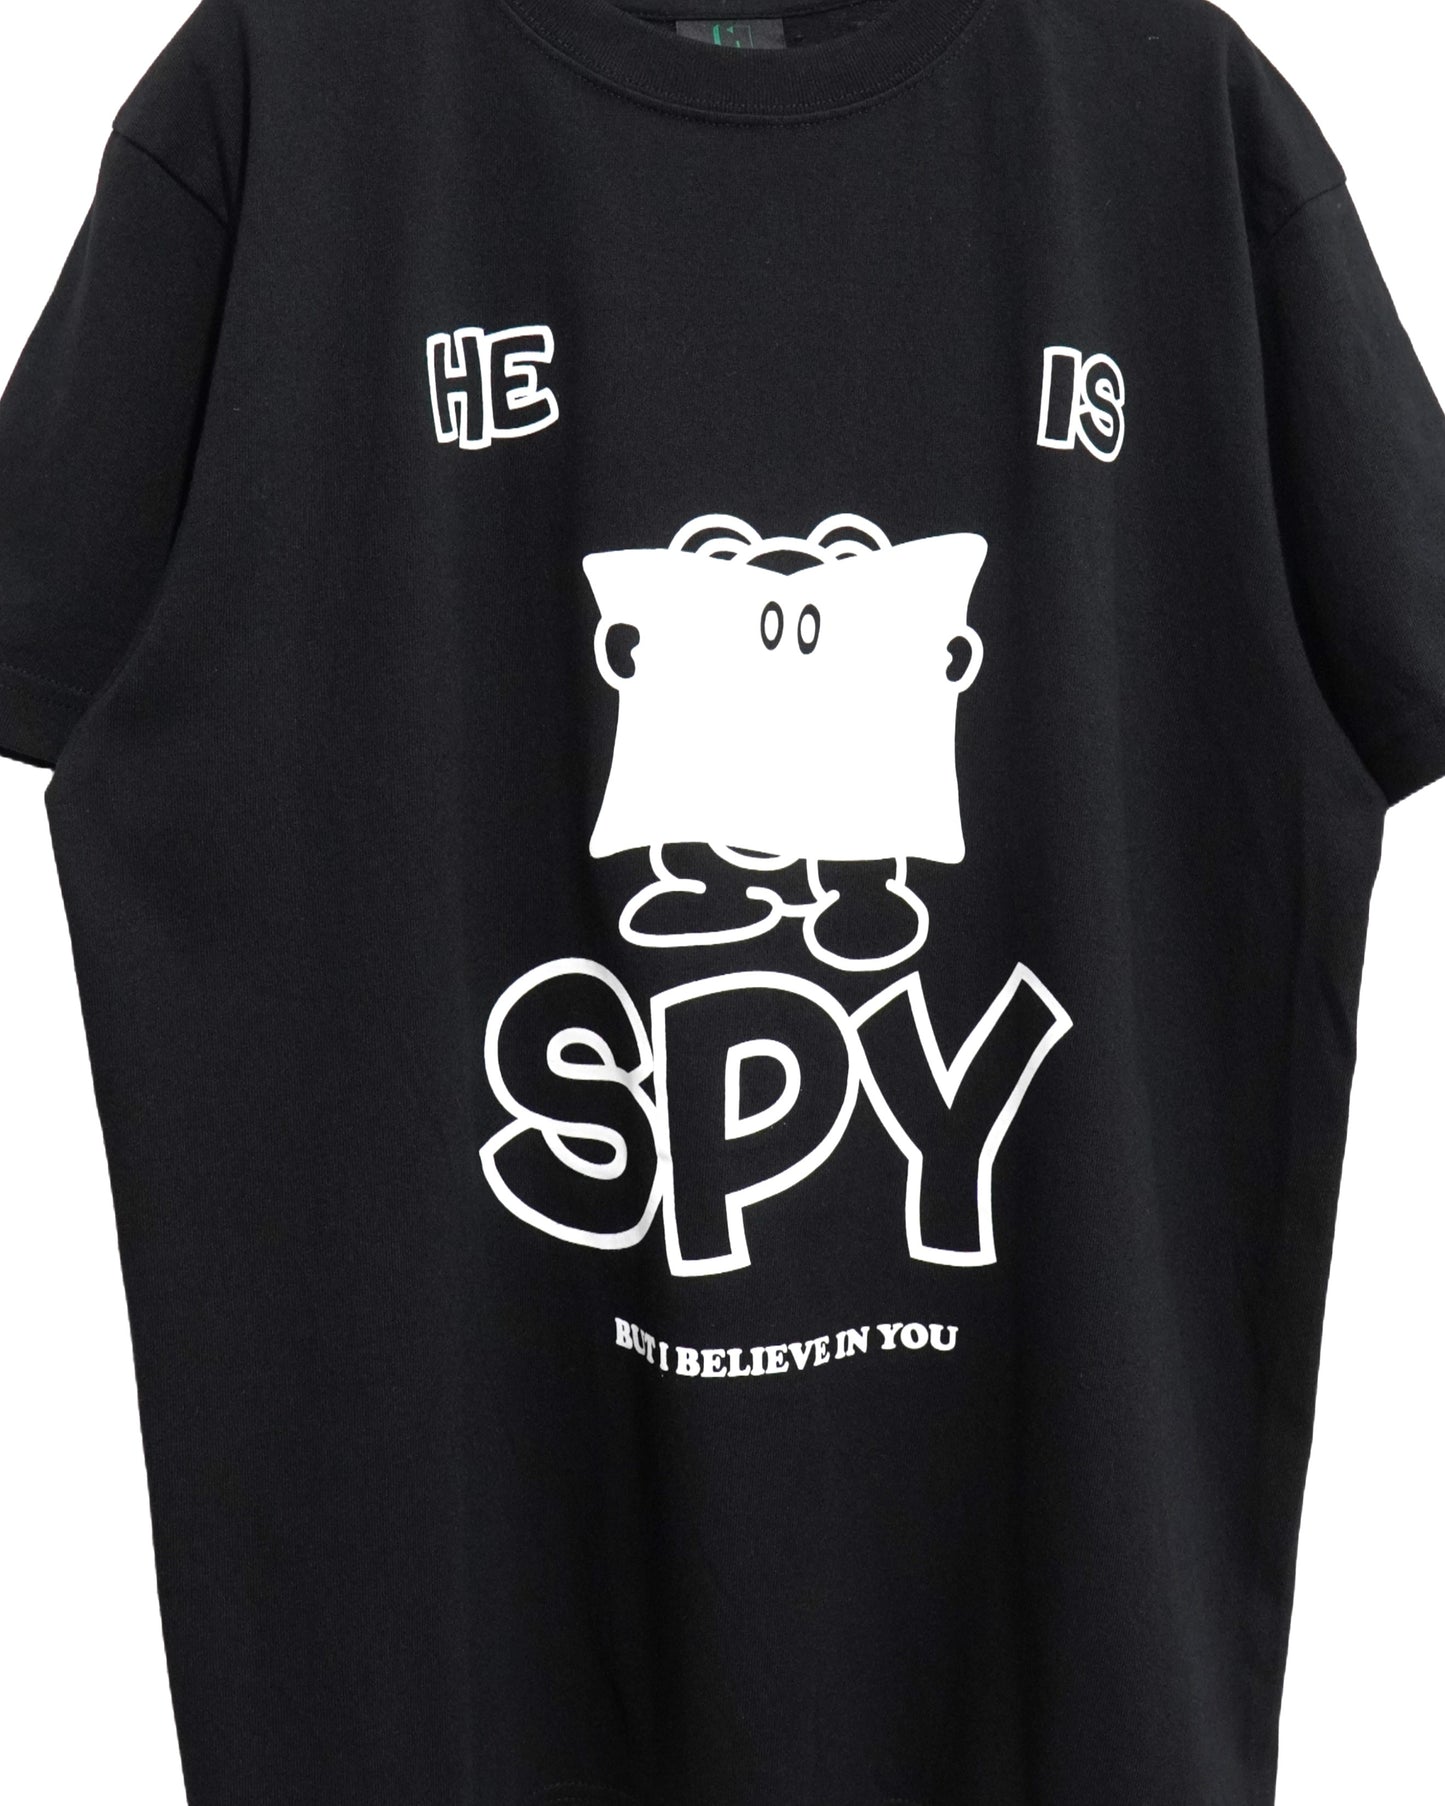 NON TOKYO /  PRINT T-SHIRT (SPY / BLACK) / 〈ノントーキョー〉プリントTシャツ (スパイ / ブラック)